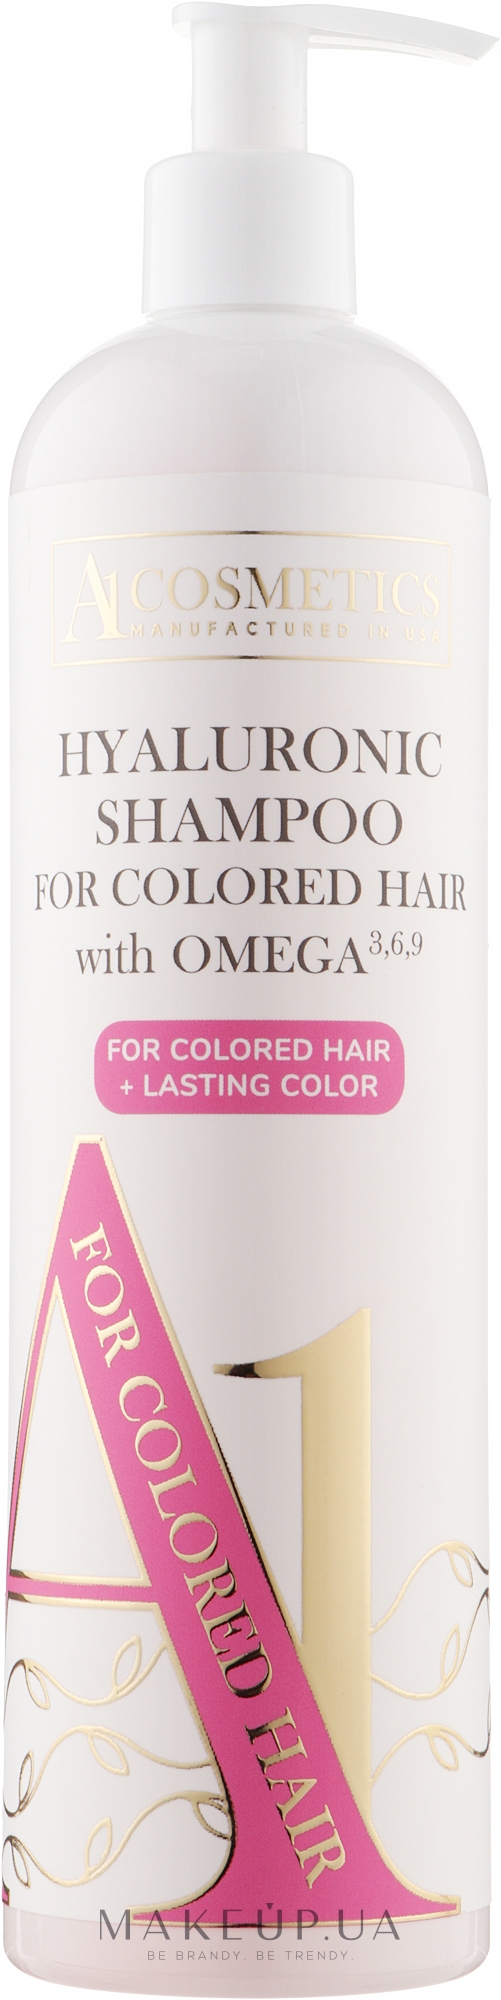 Гиалуроновый шампунь для окрашенных волос - A1 Cosmetics For Colored Hair Hyaluronic Shampoo With Omega 3-6-9 + Lasting Color — фото 500ml